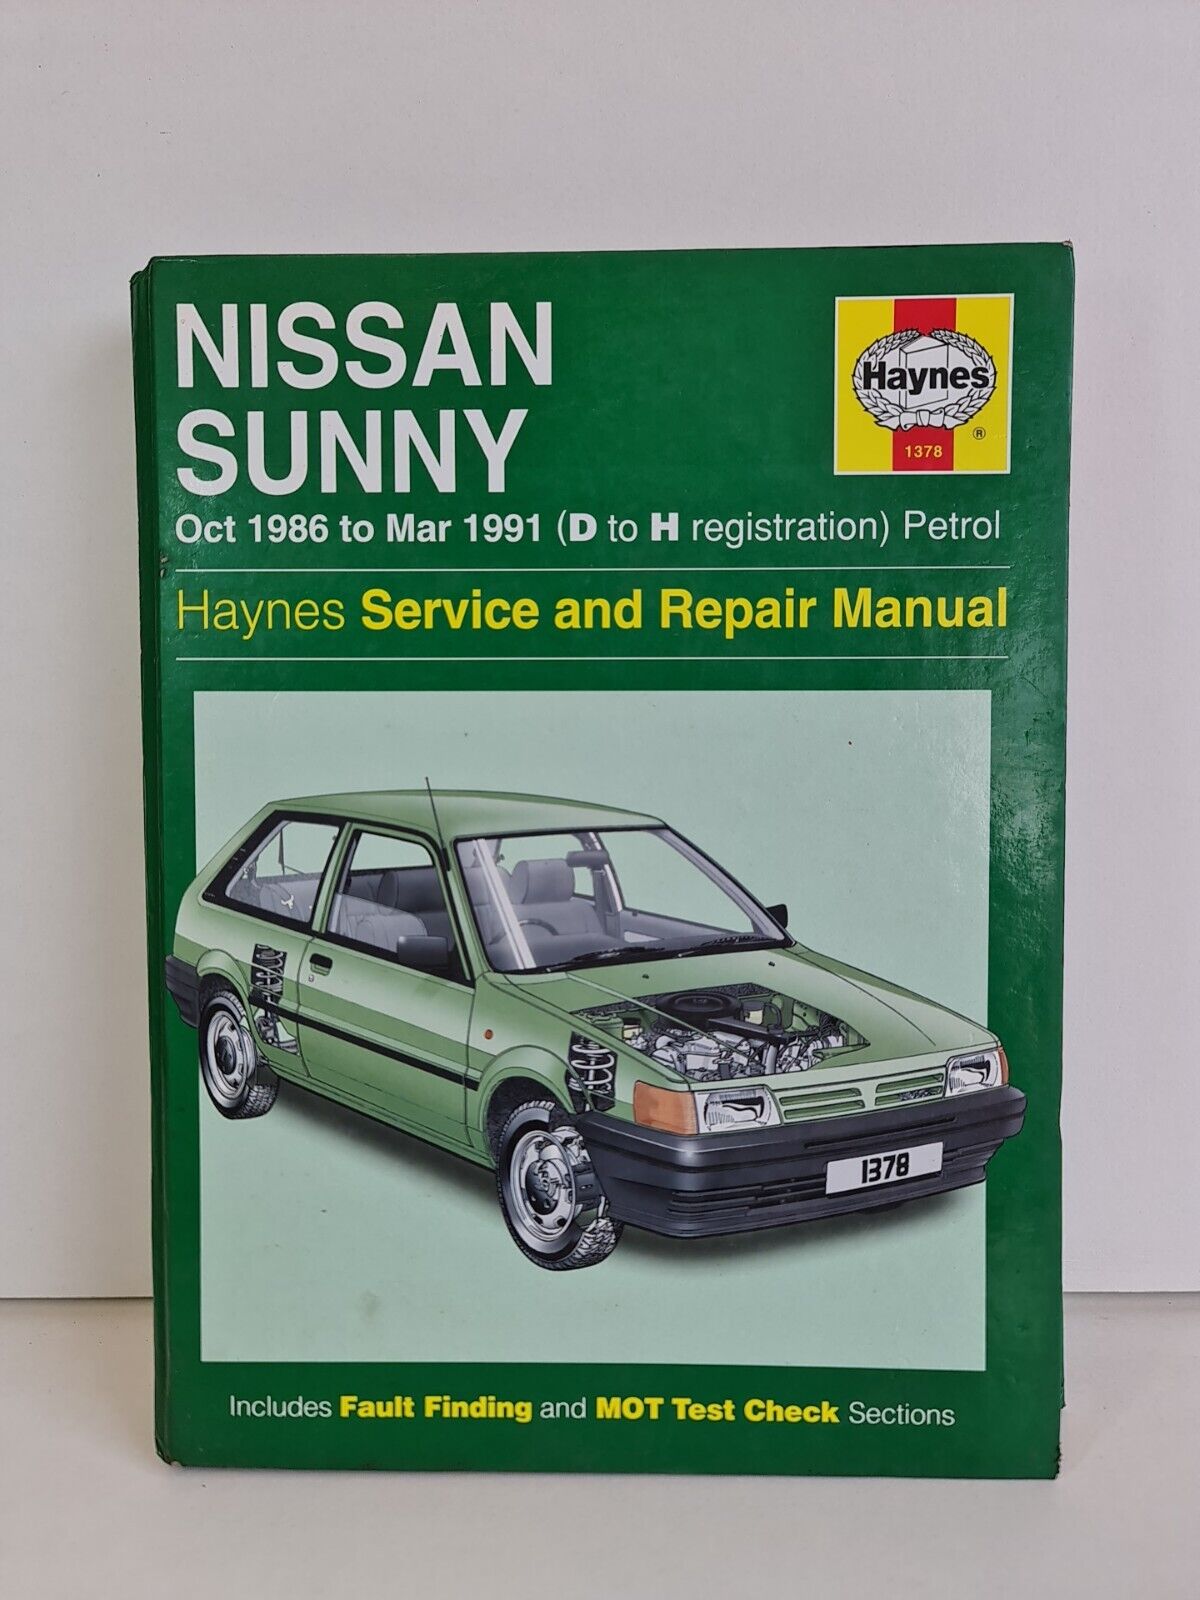 Haynes Manual - Nissan Sunny 1986-91 Service and Repair Manual (1988)